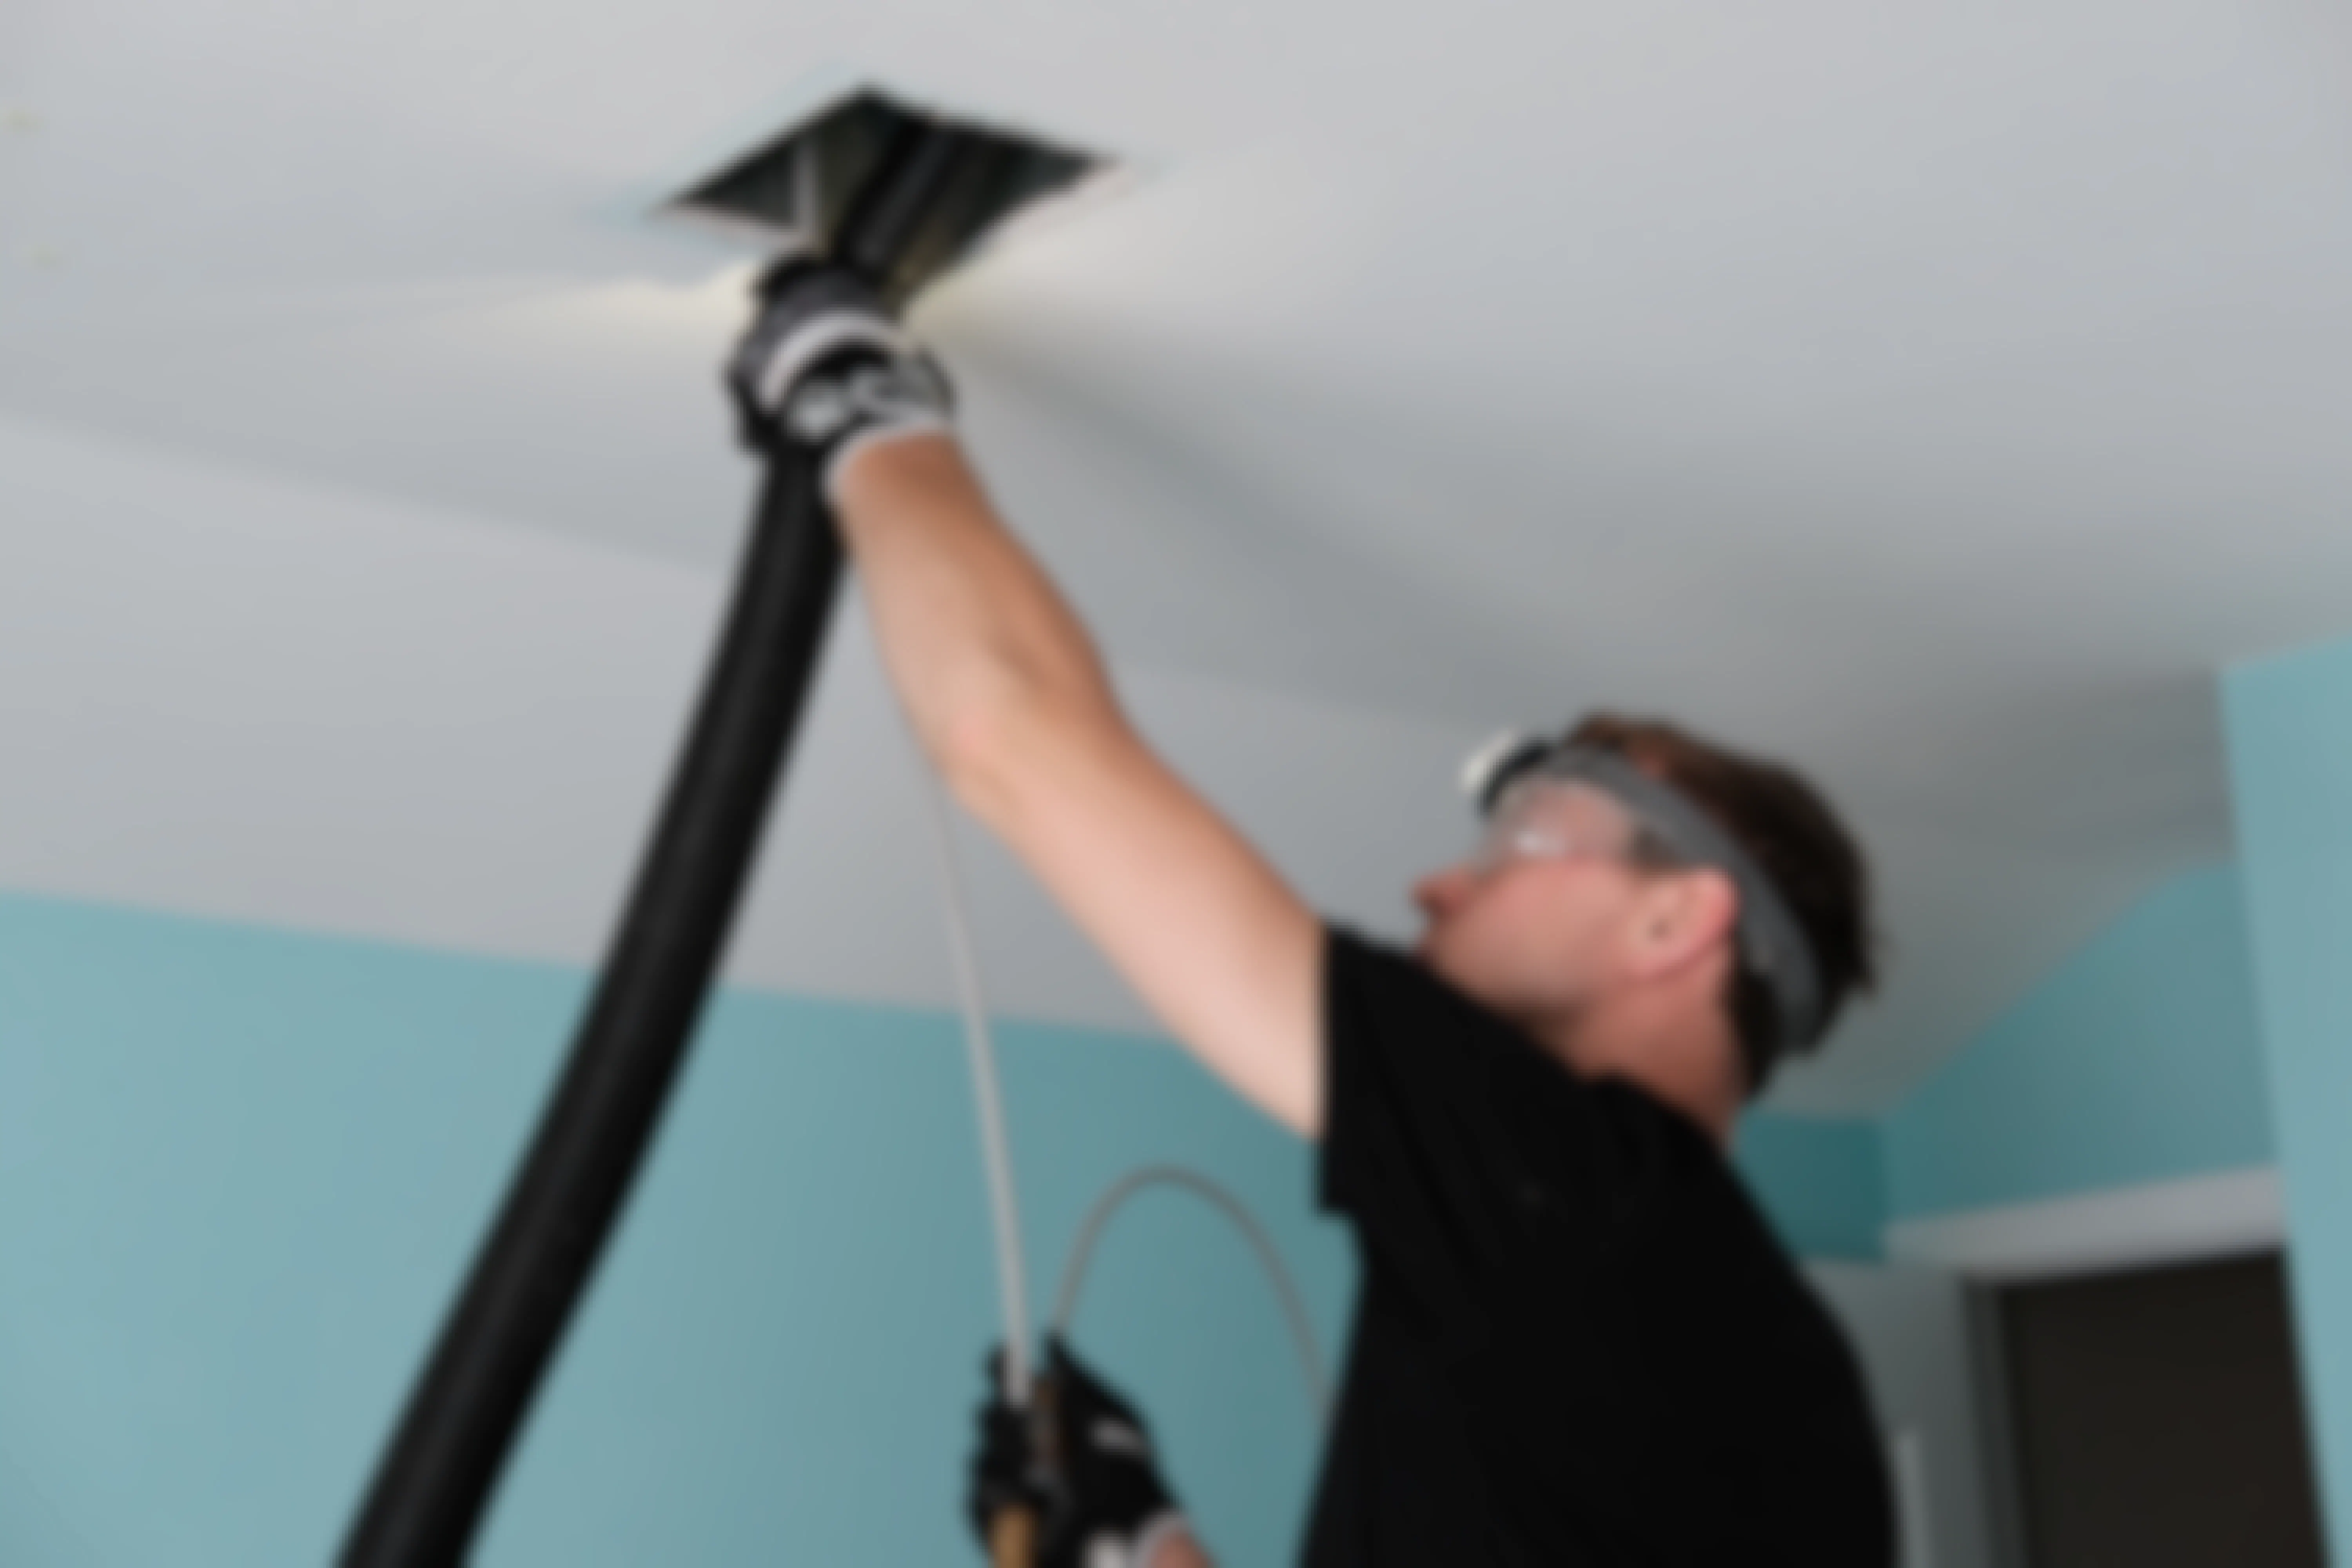 A man using a vaccum hose to clean out an air duct through a vent hole.